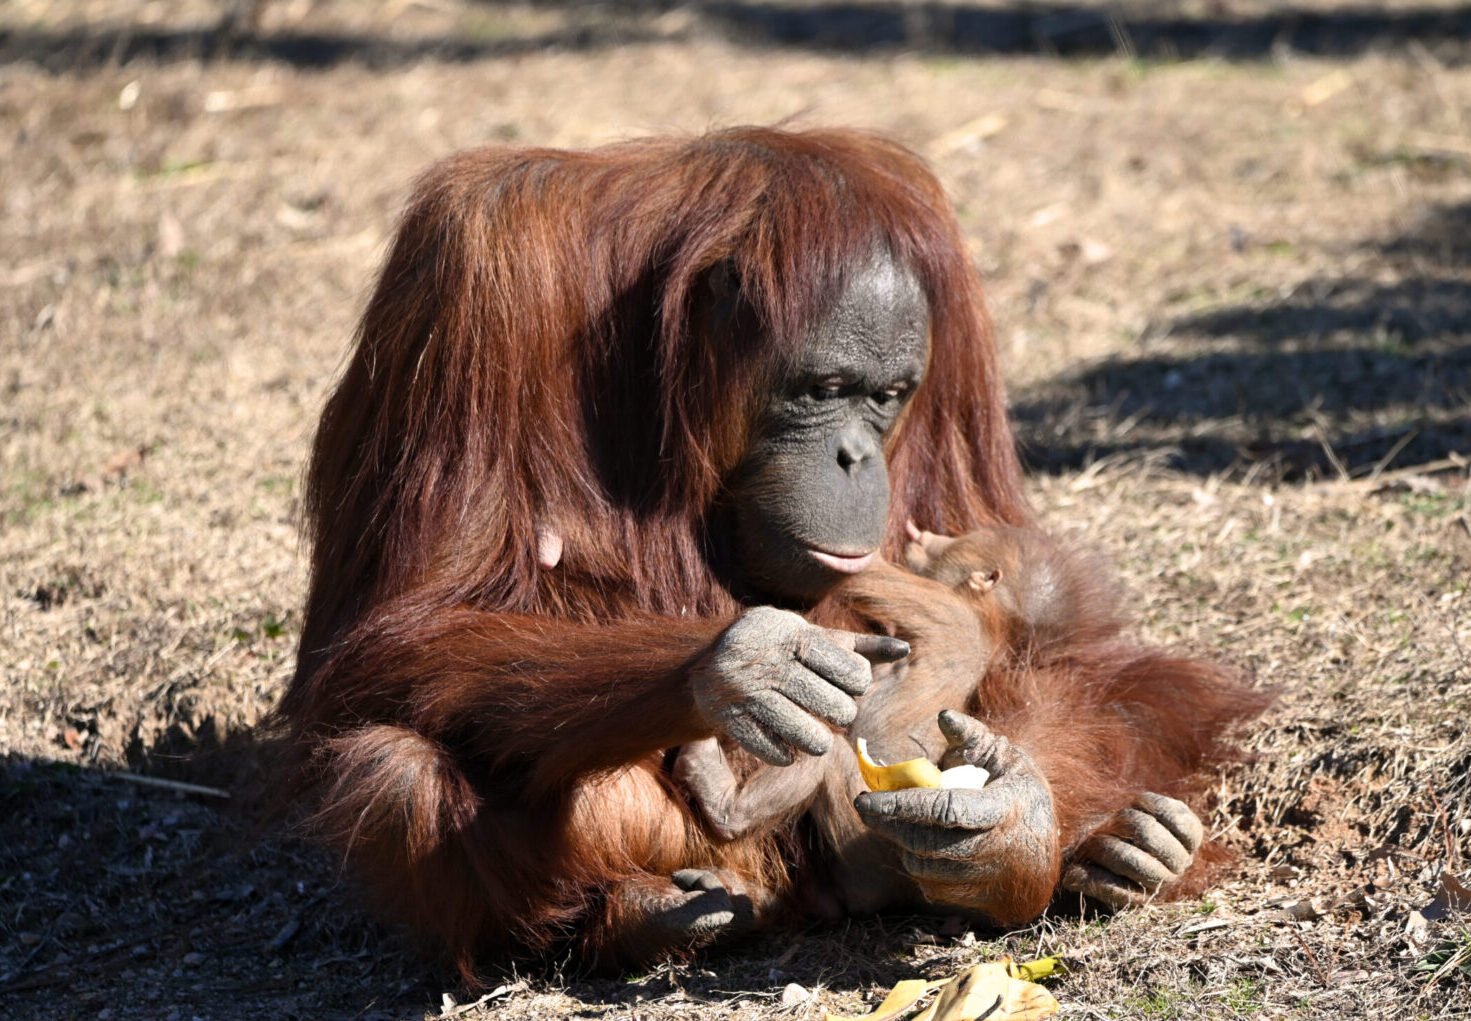 orangutan holds its baby at Metro Richmond Zoo